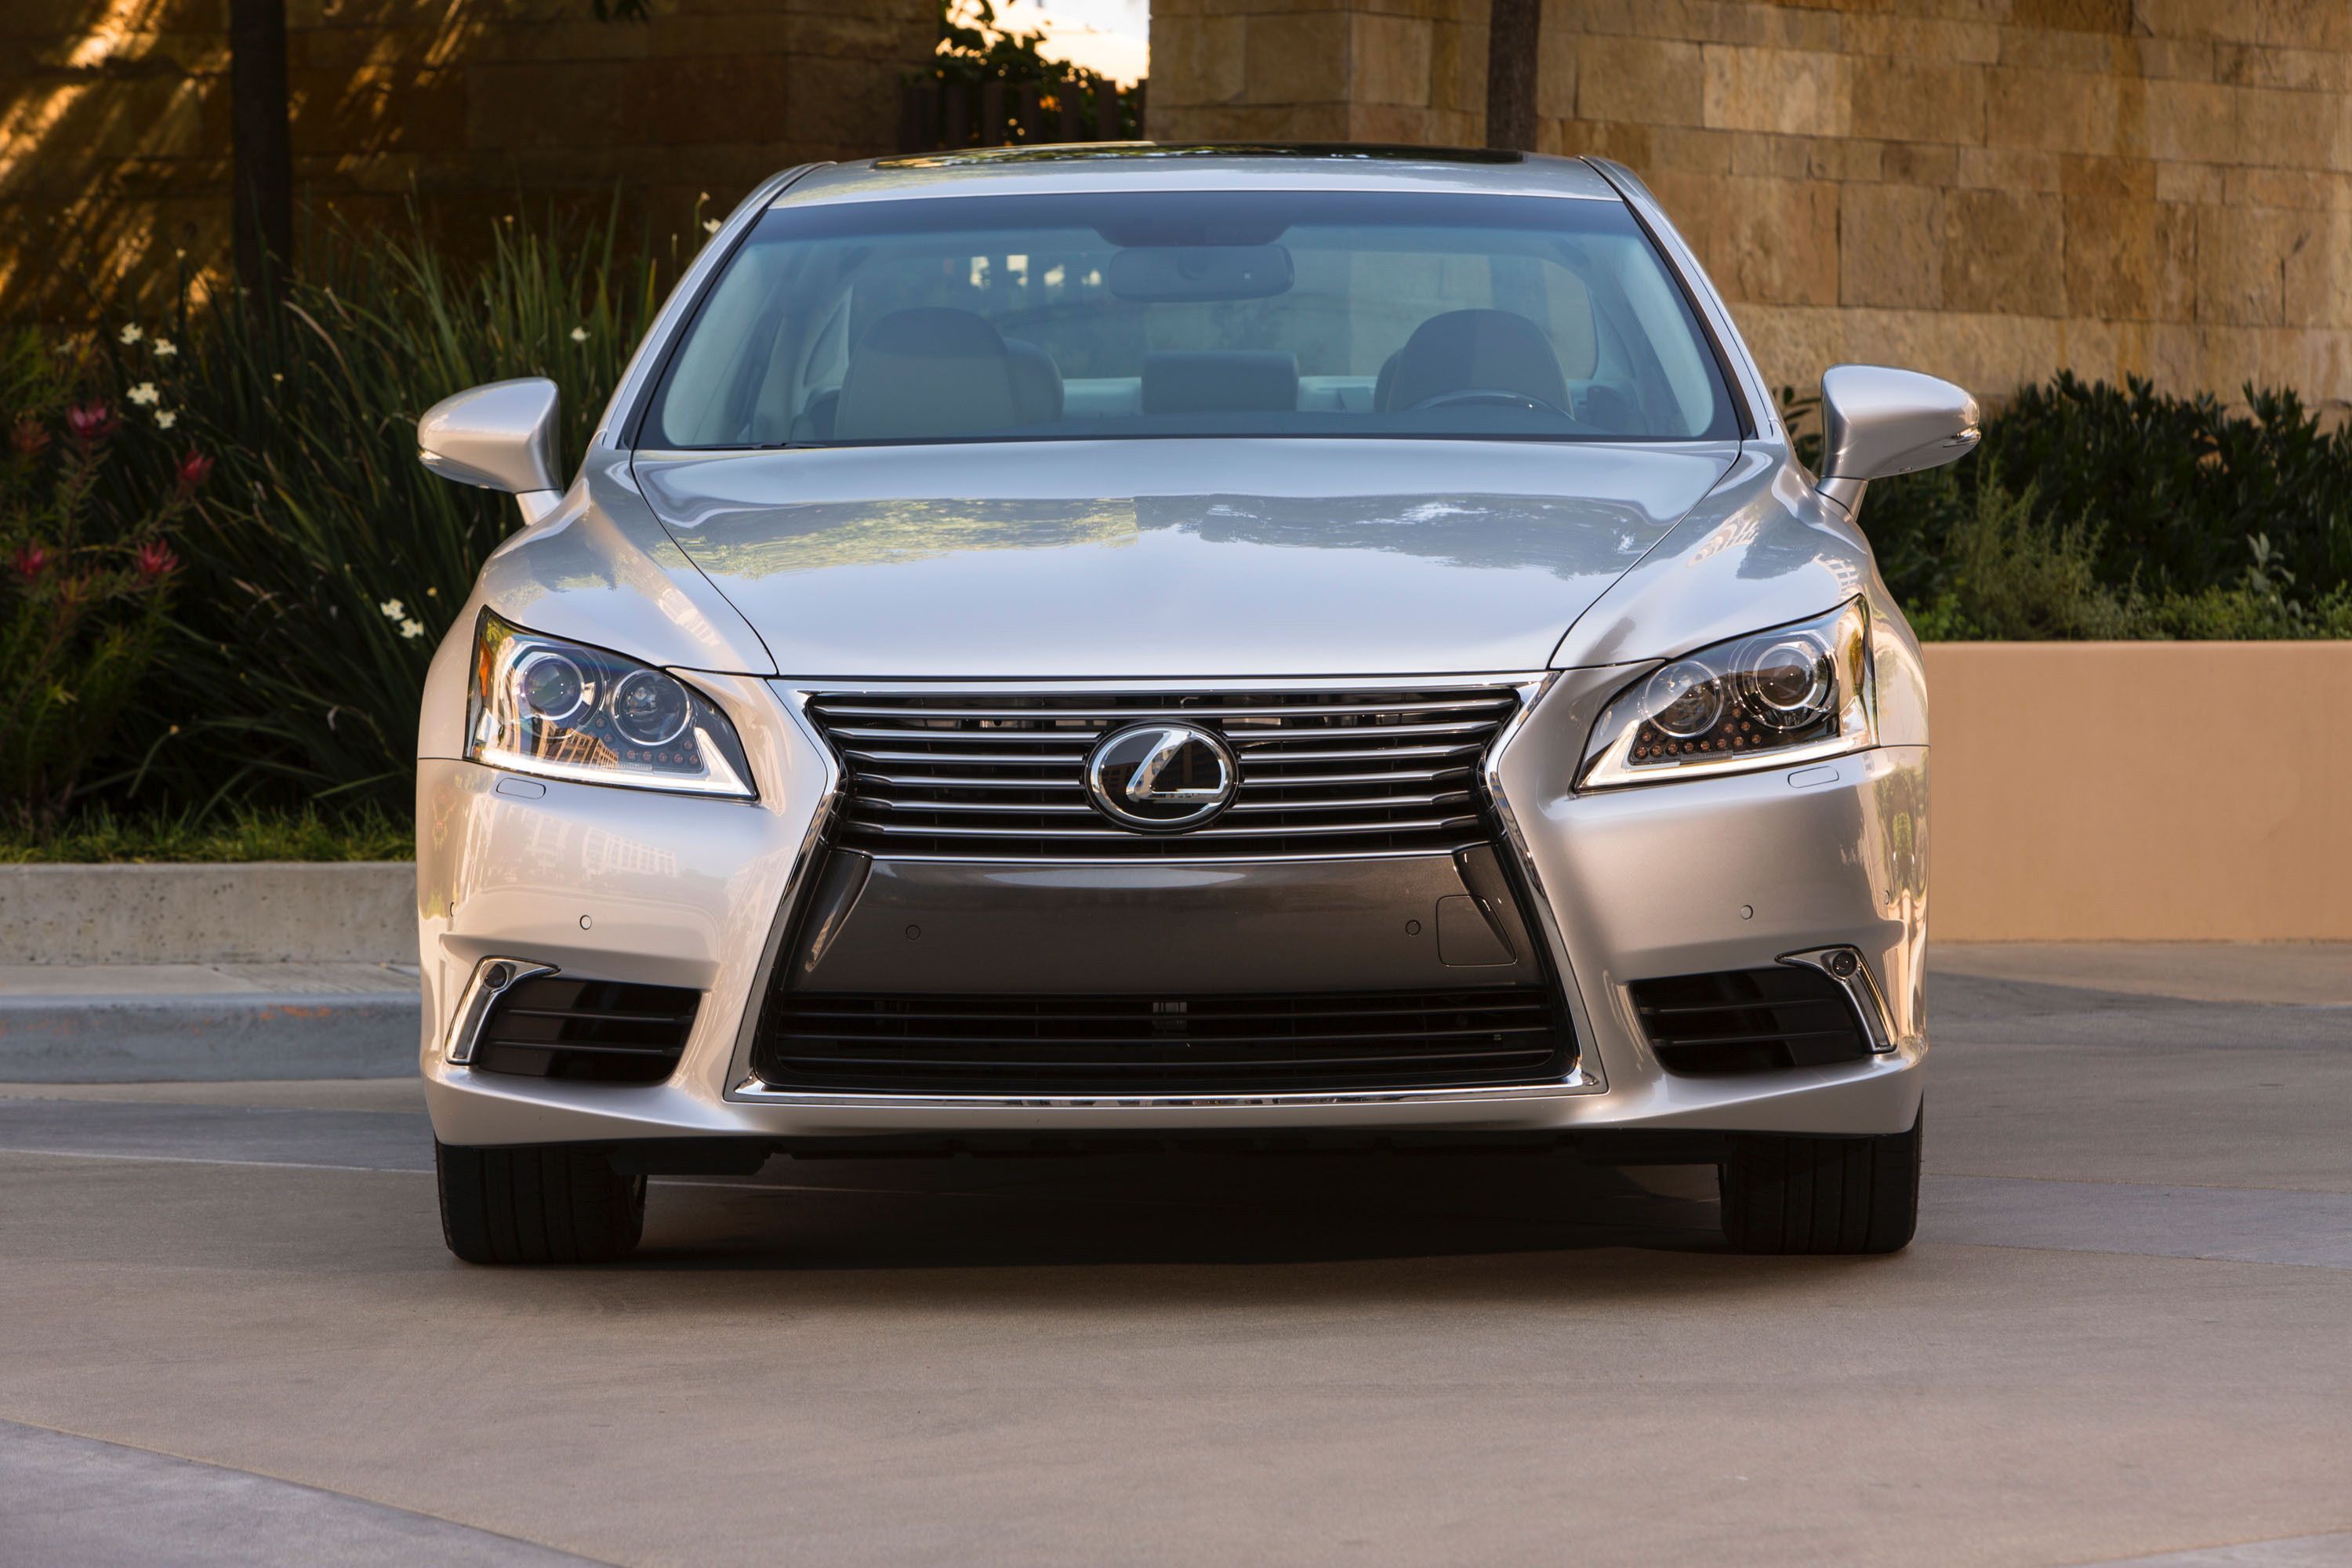 2014 - 2015 Lexus LS